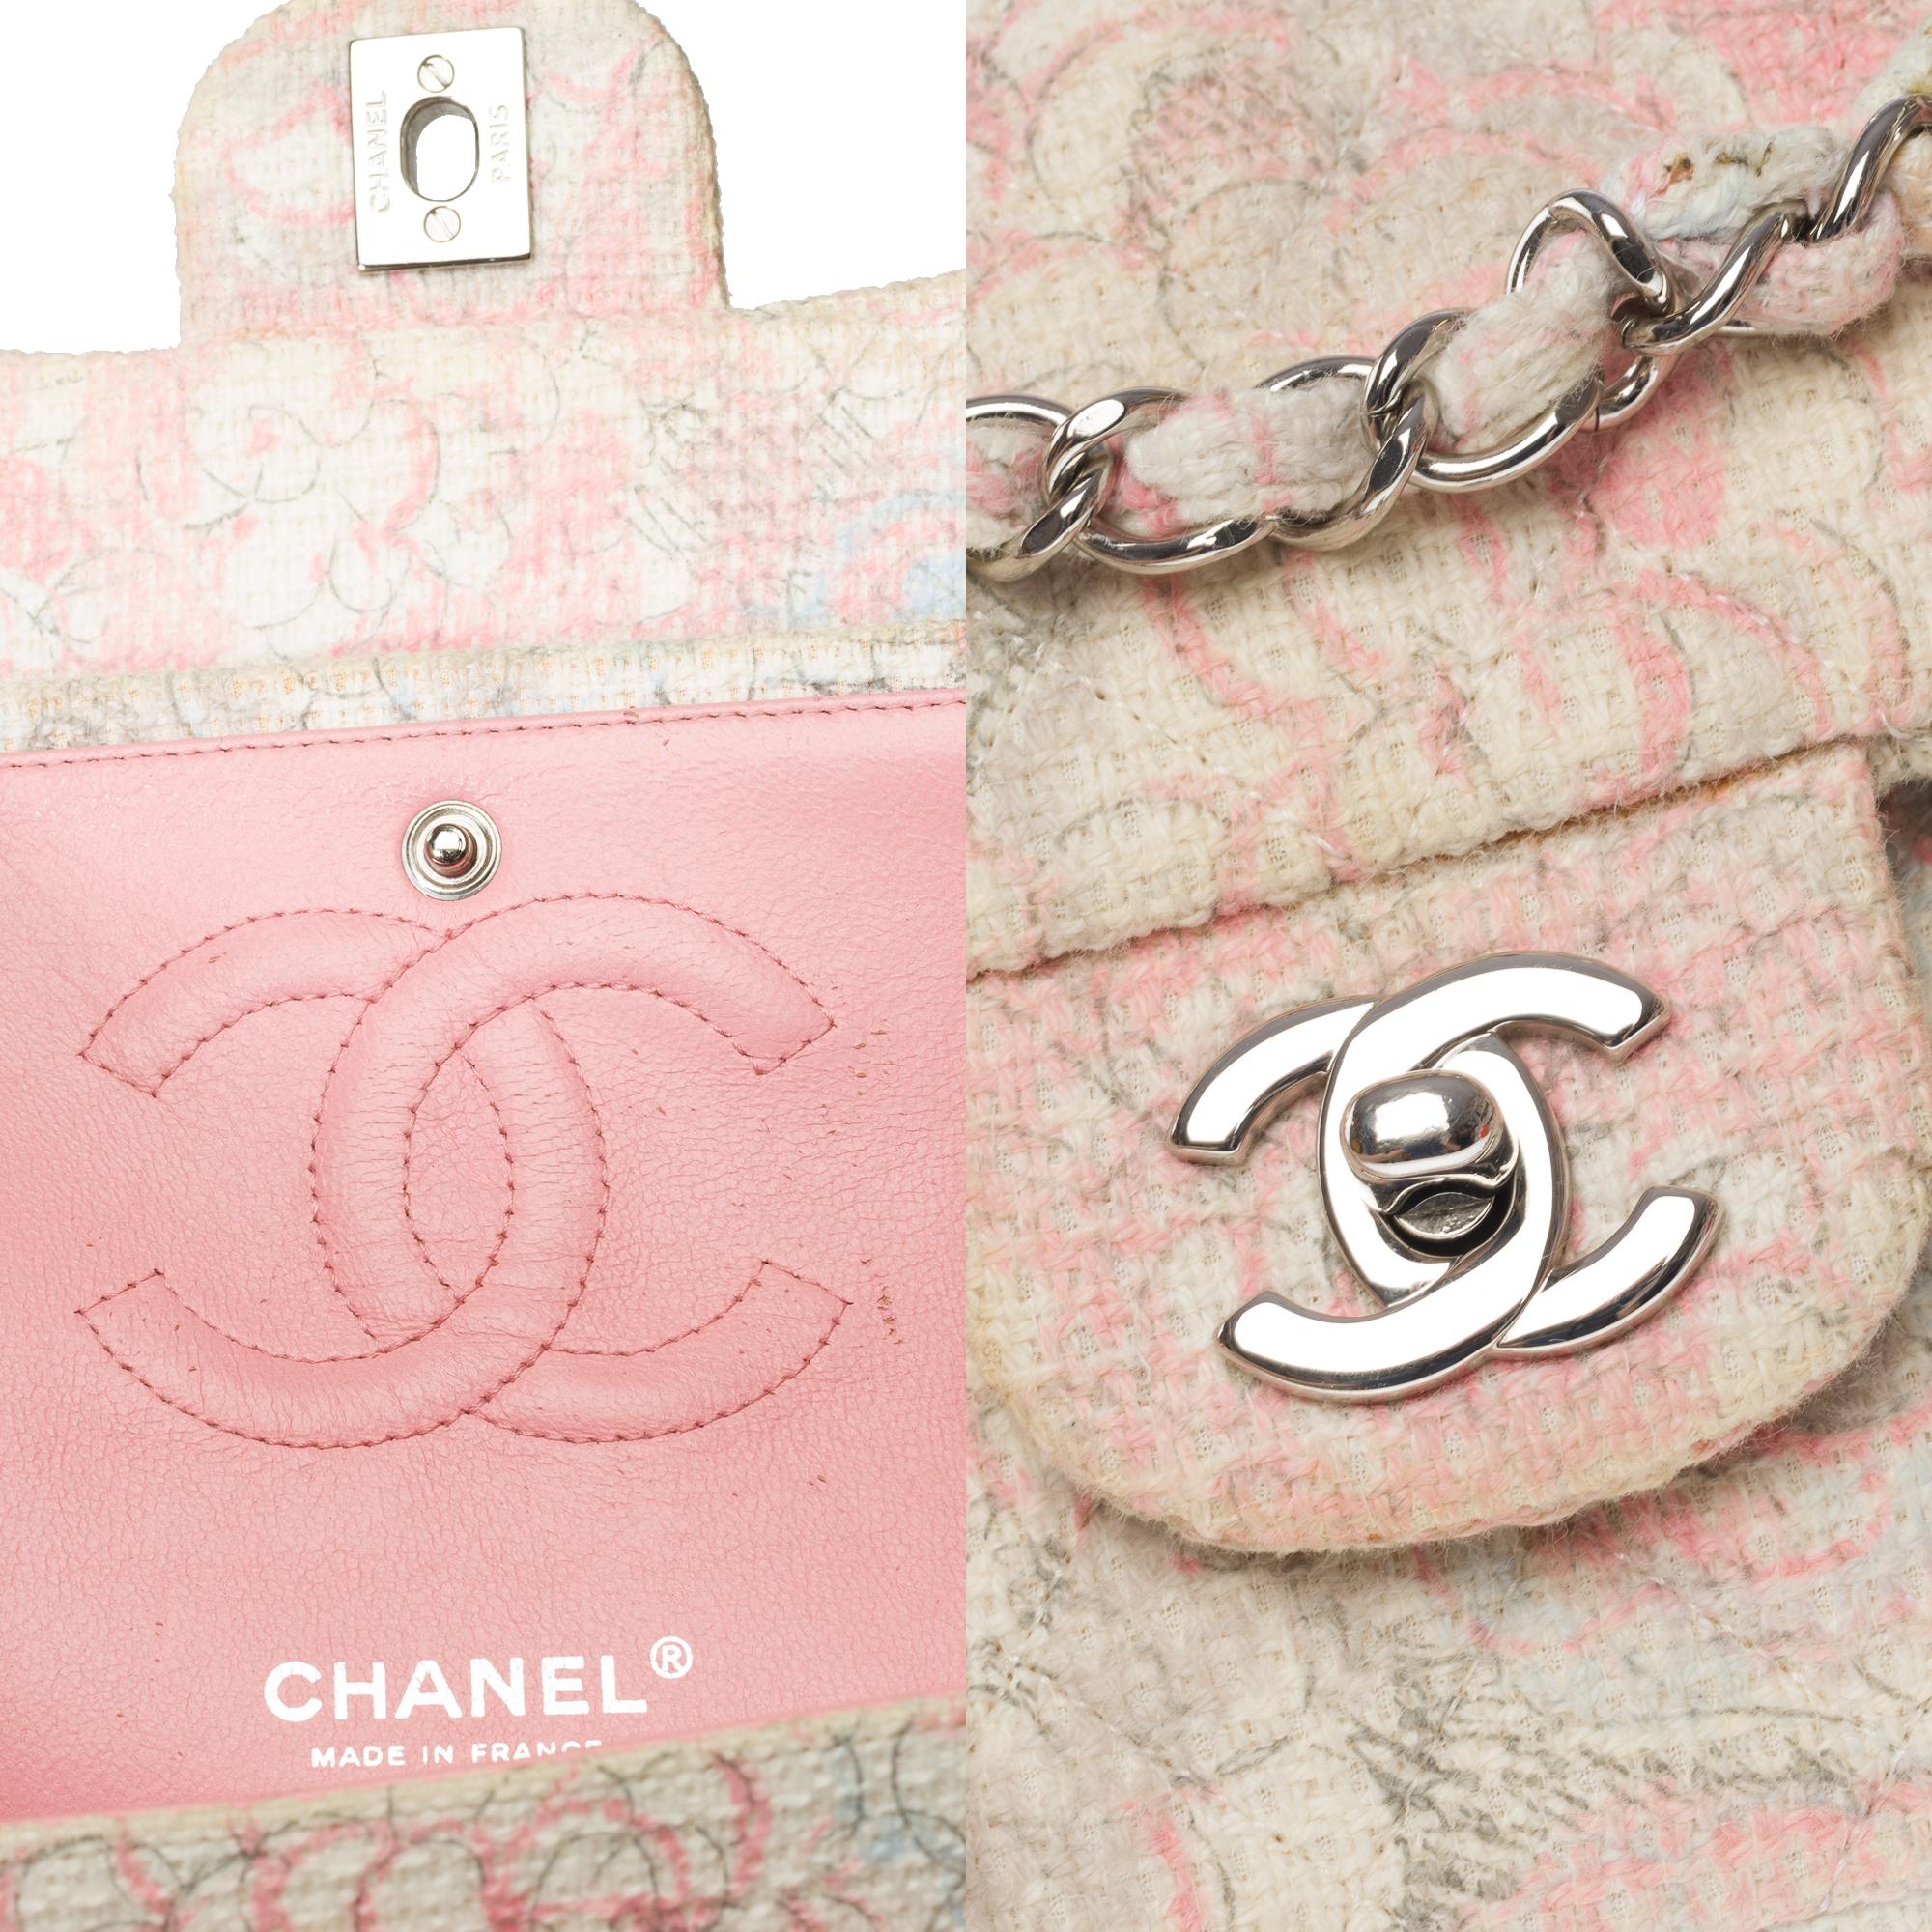 Rare Camelia Limited Edition Chanel Timeless Medium Shoulder bag in Tweed, SHW 2